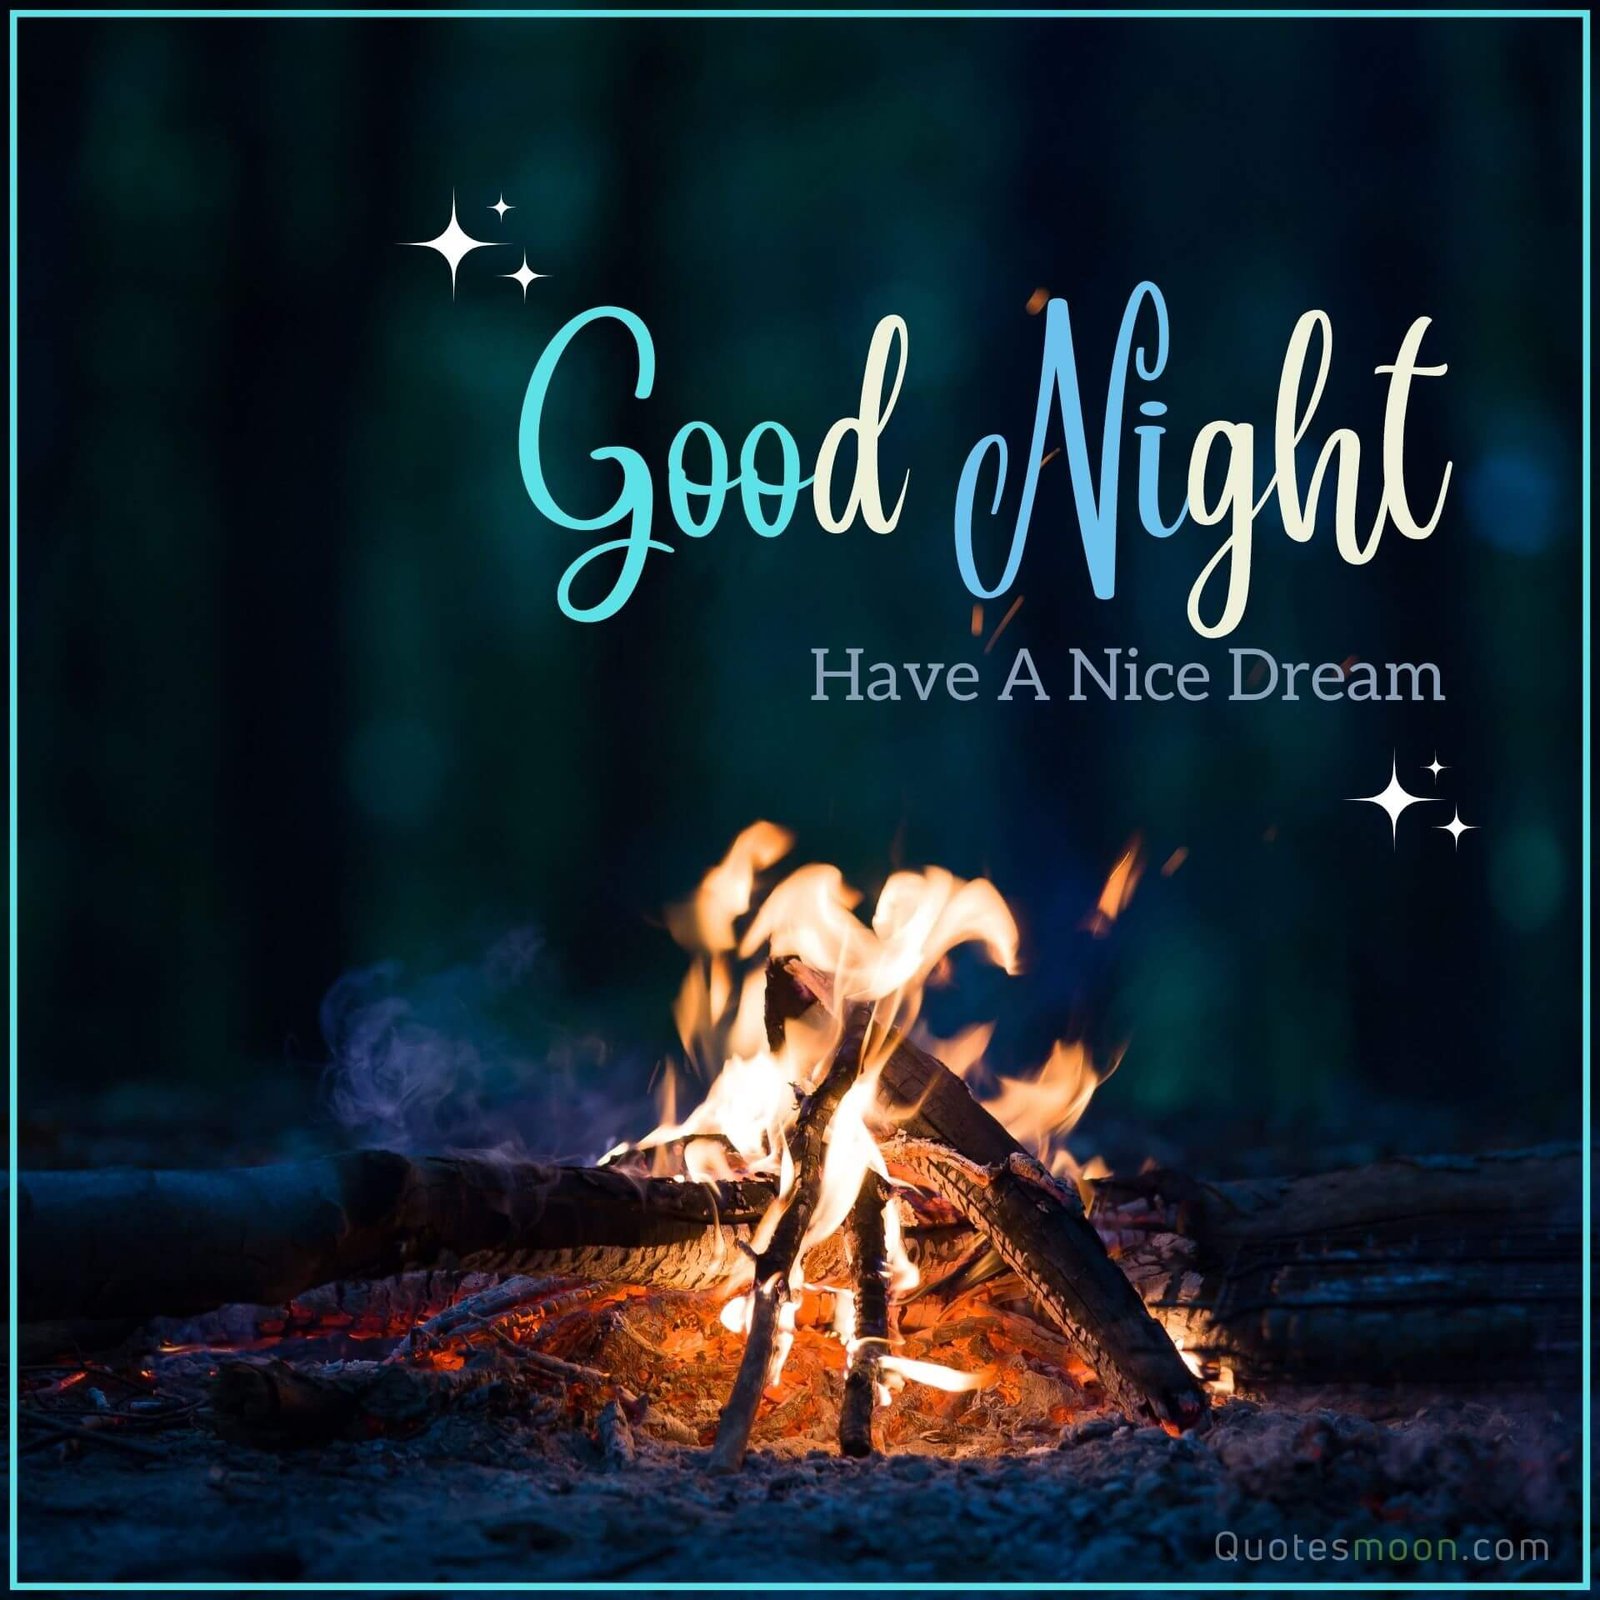 good night sweet dreams image new